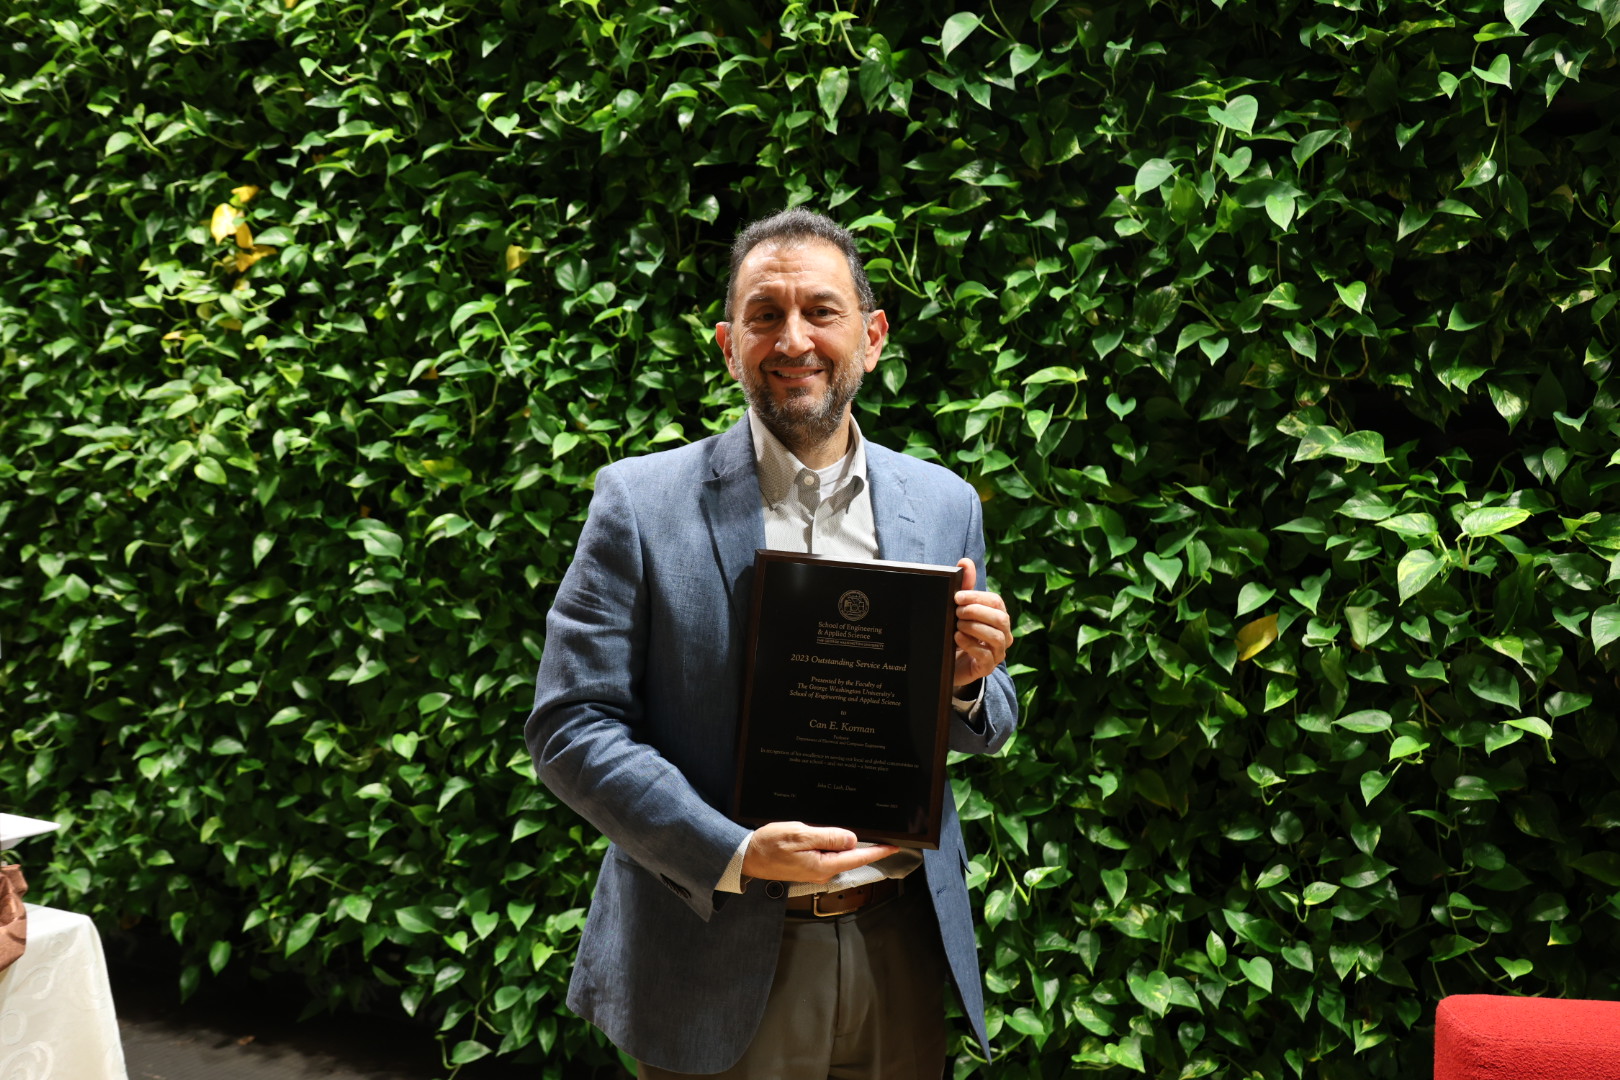 Professor Korman holding his award plaque